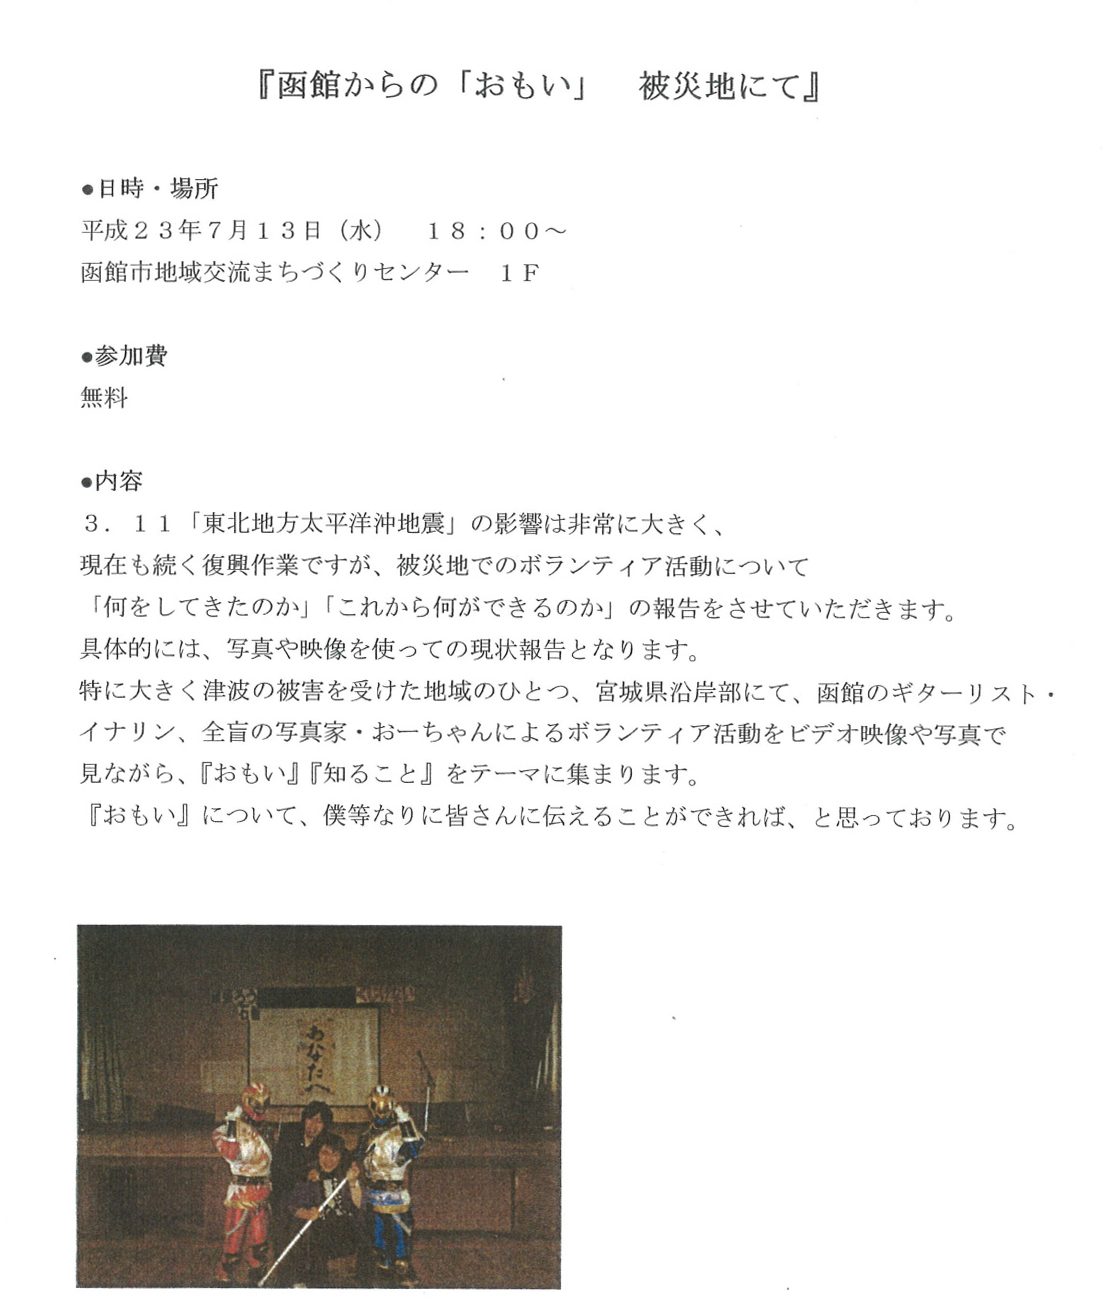 http://www.hakomachi.com/diary/images/20110712113350_00001.jpg